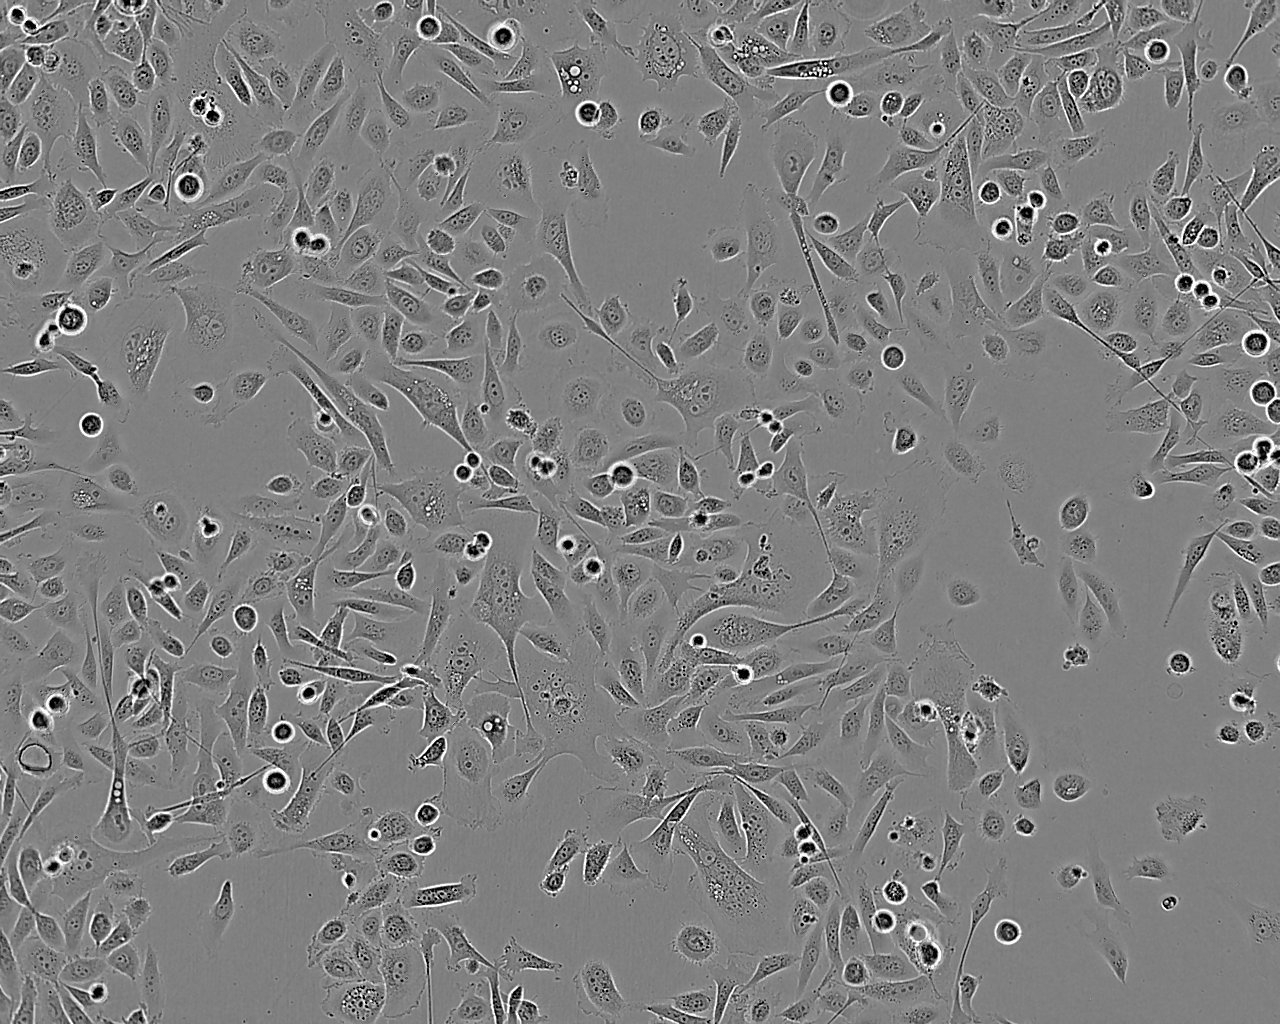 COV504 epithelioid cells人卵巢癌细胞系